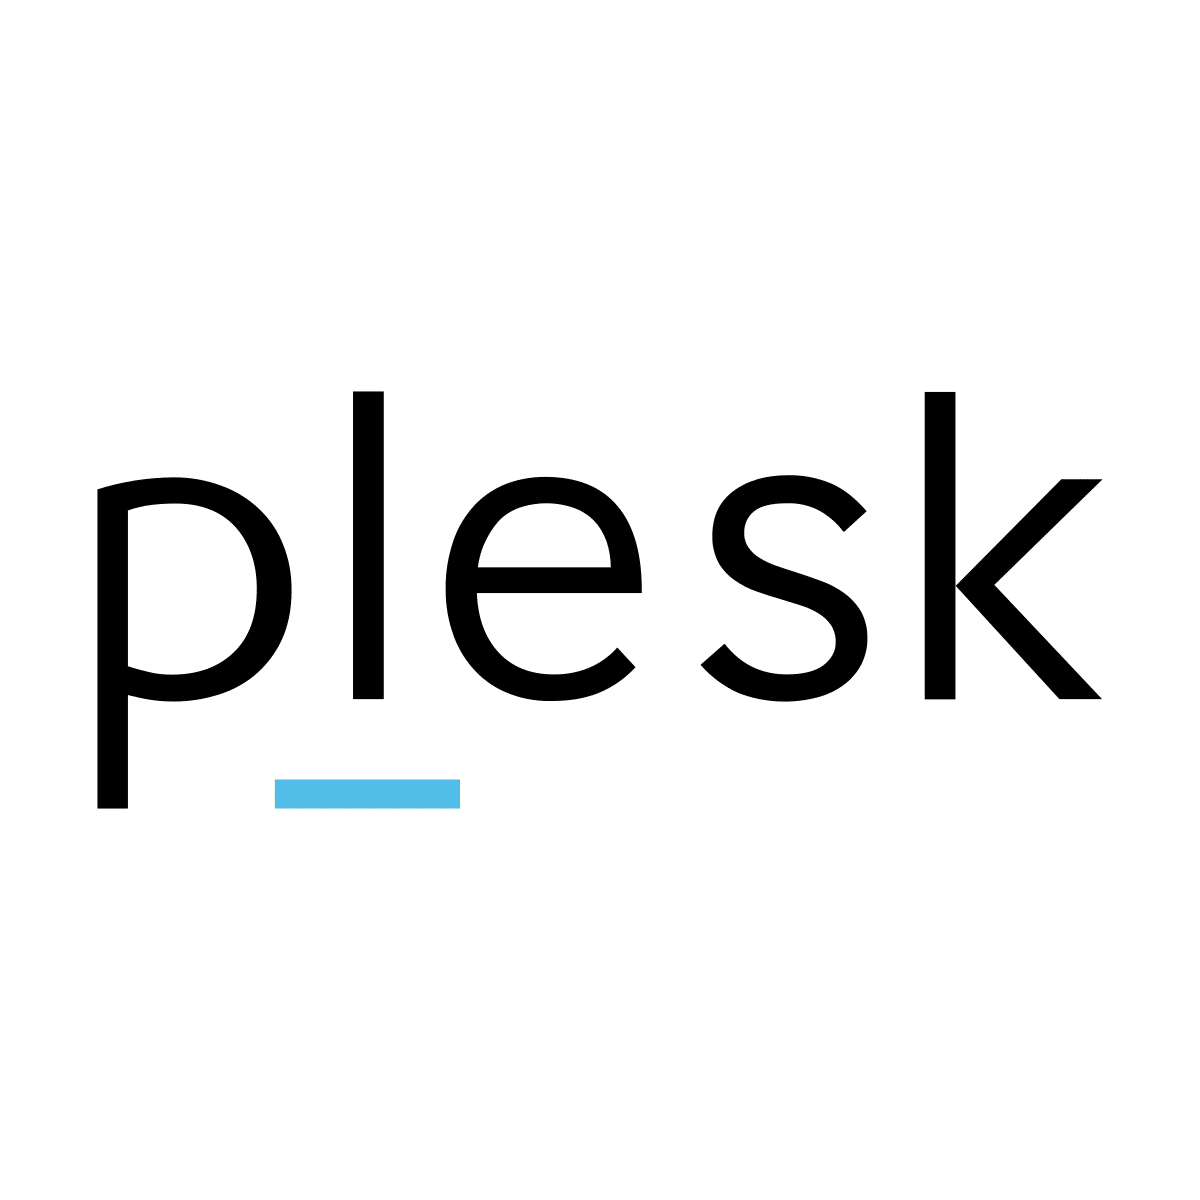 Plesk repair utility for mysql